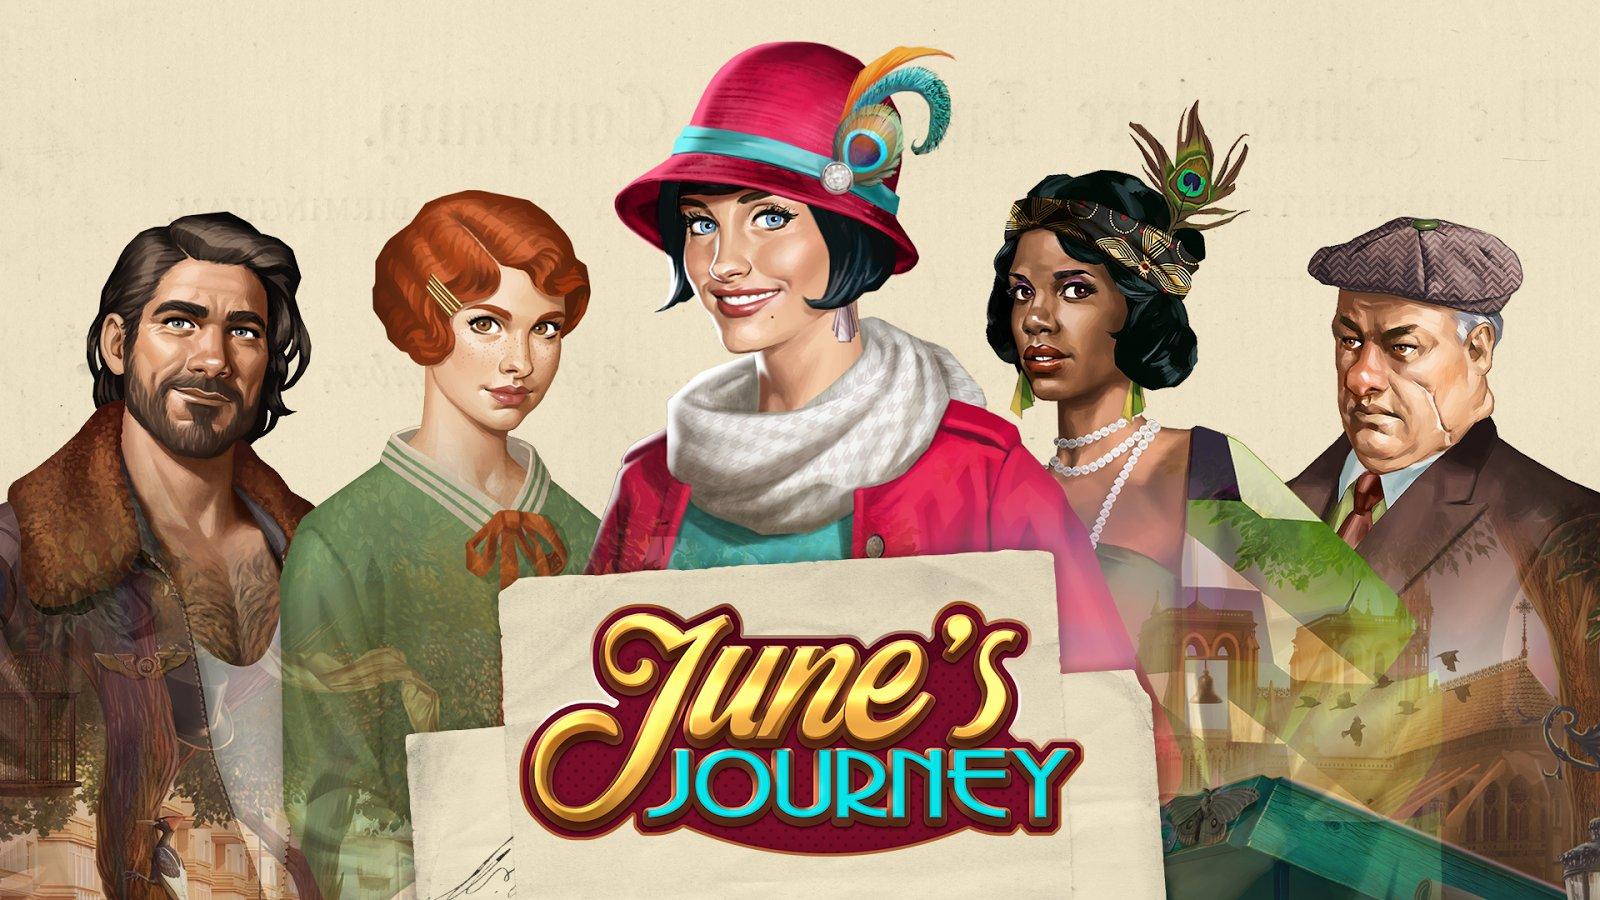 June journey тайны. Игра Jones Journey. Игра June's Journey. Junes Journey сцены. Герои игры June's Journey.